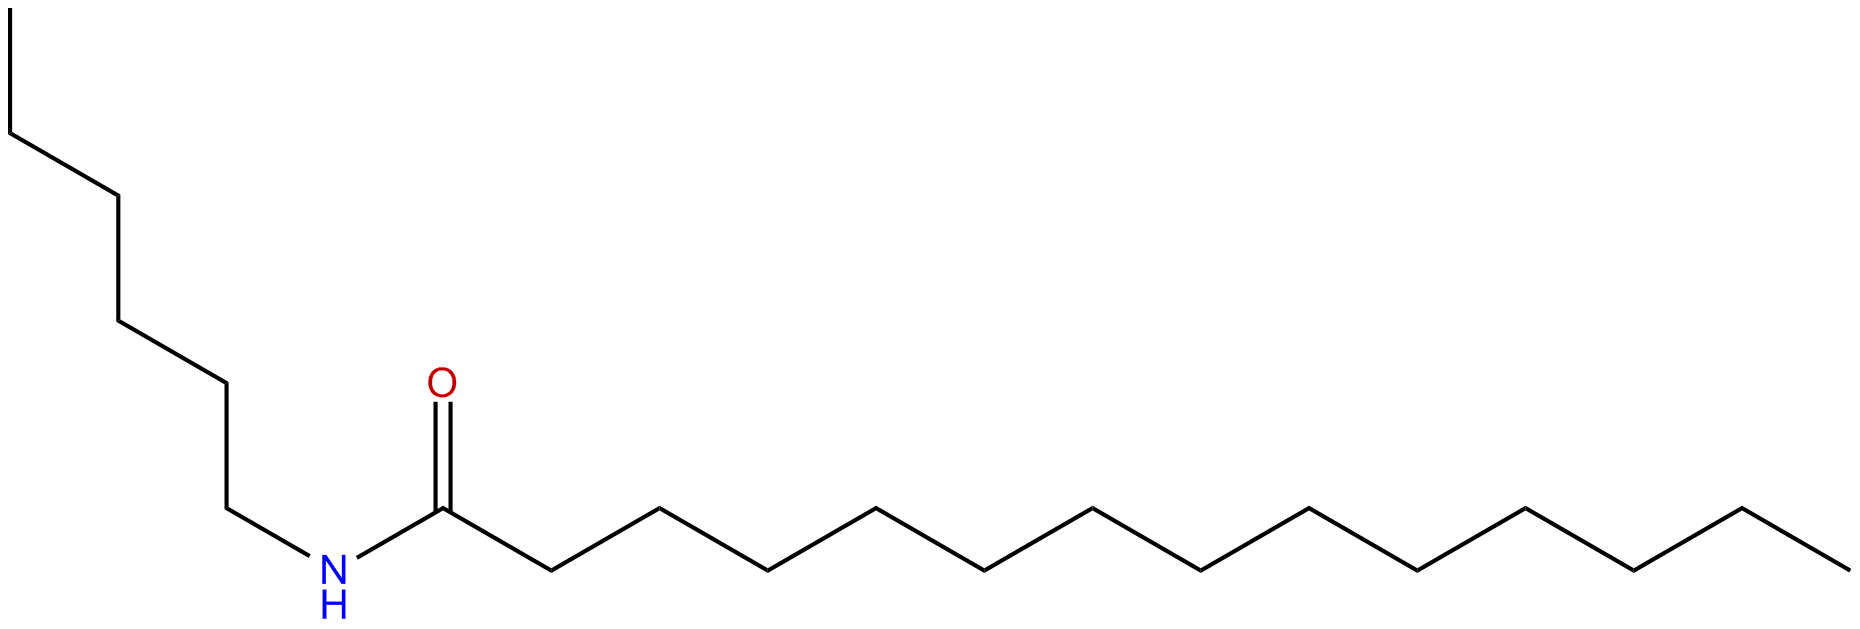 Image of N-hexyltetradecanamide